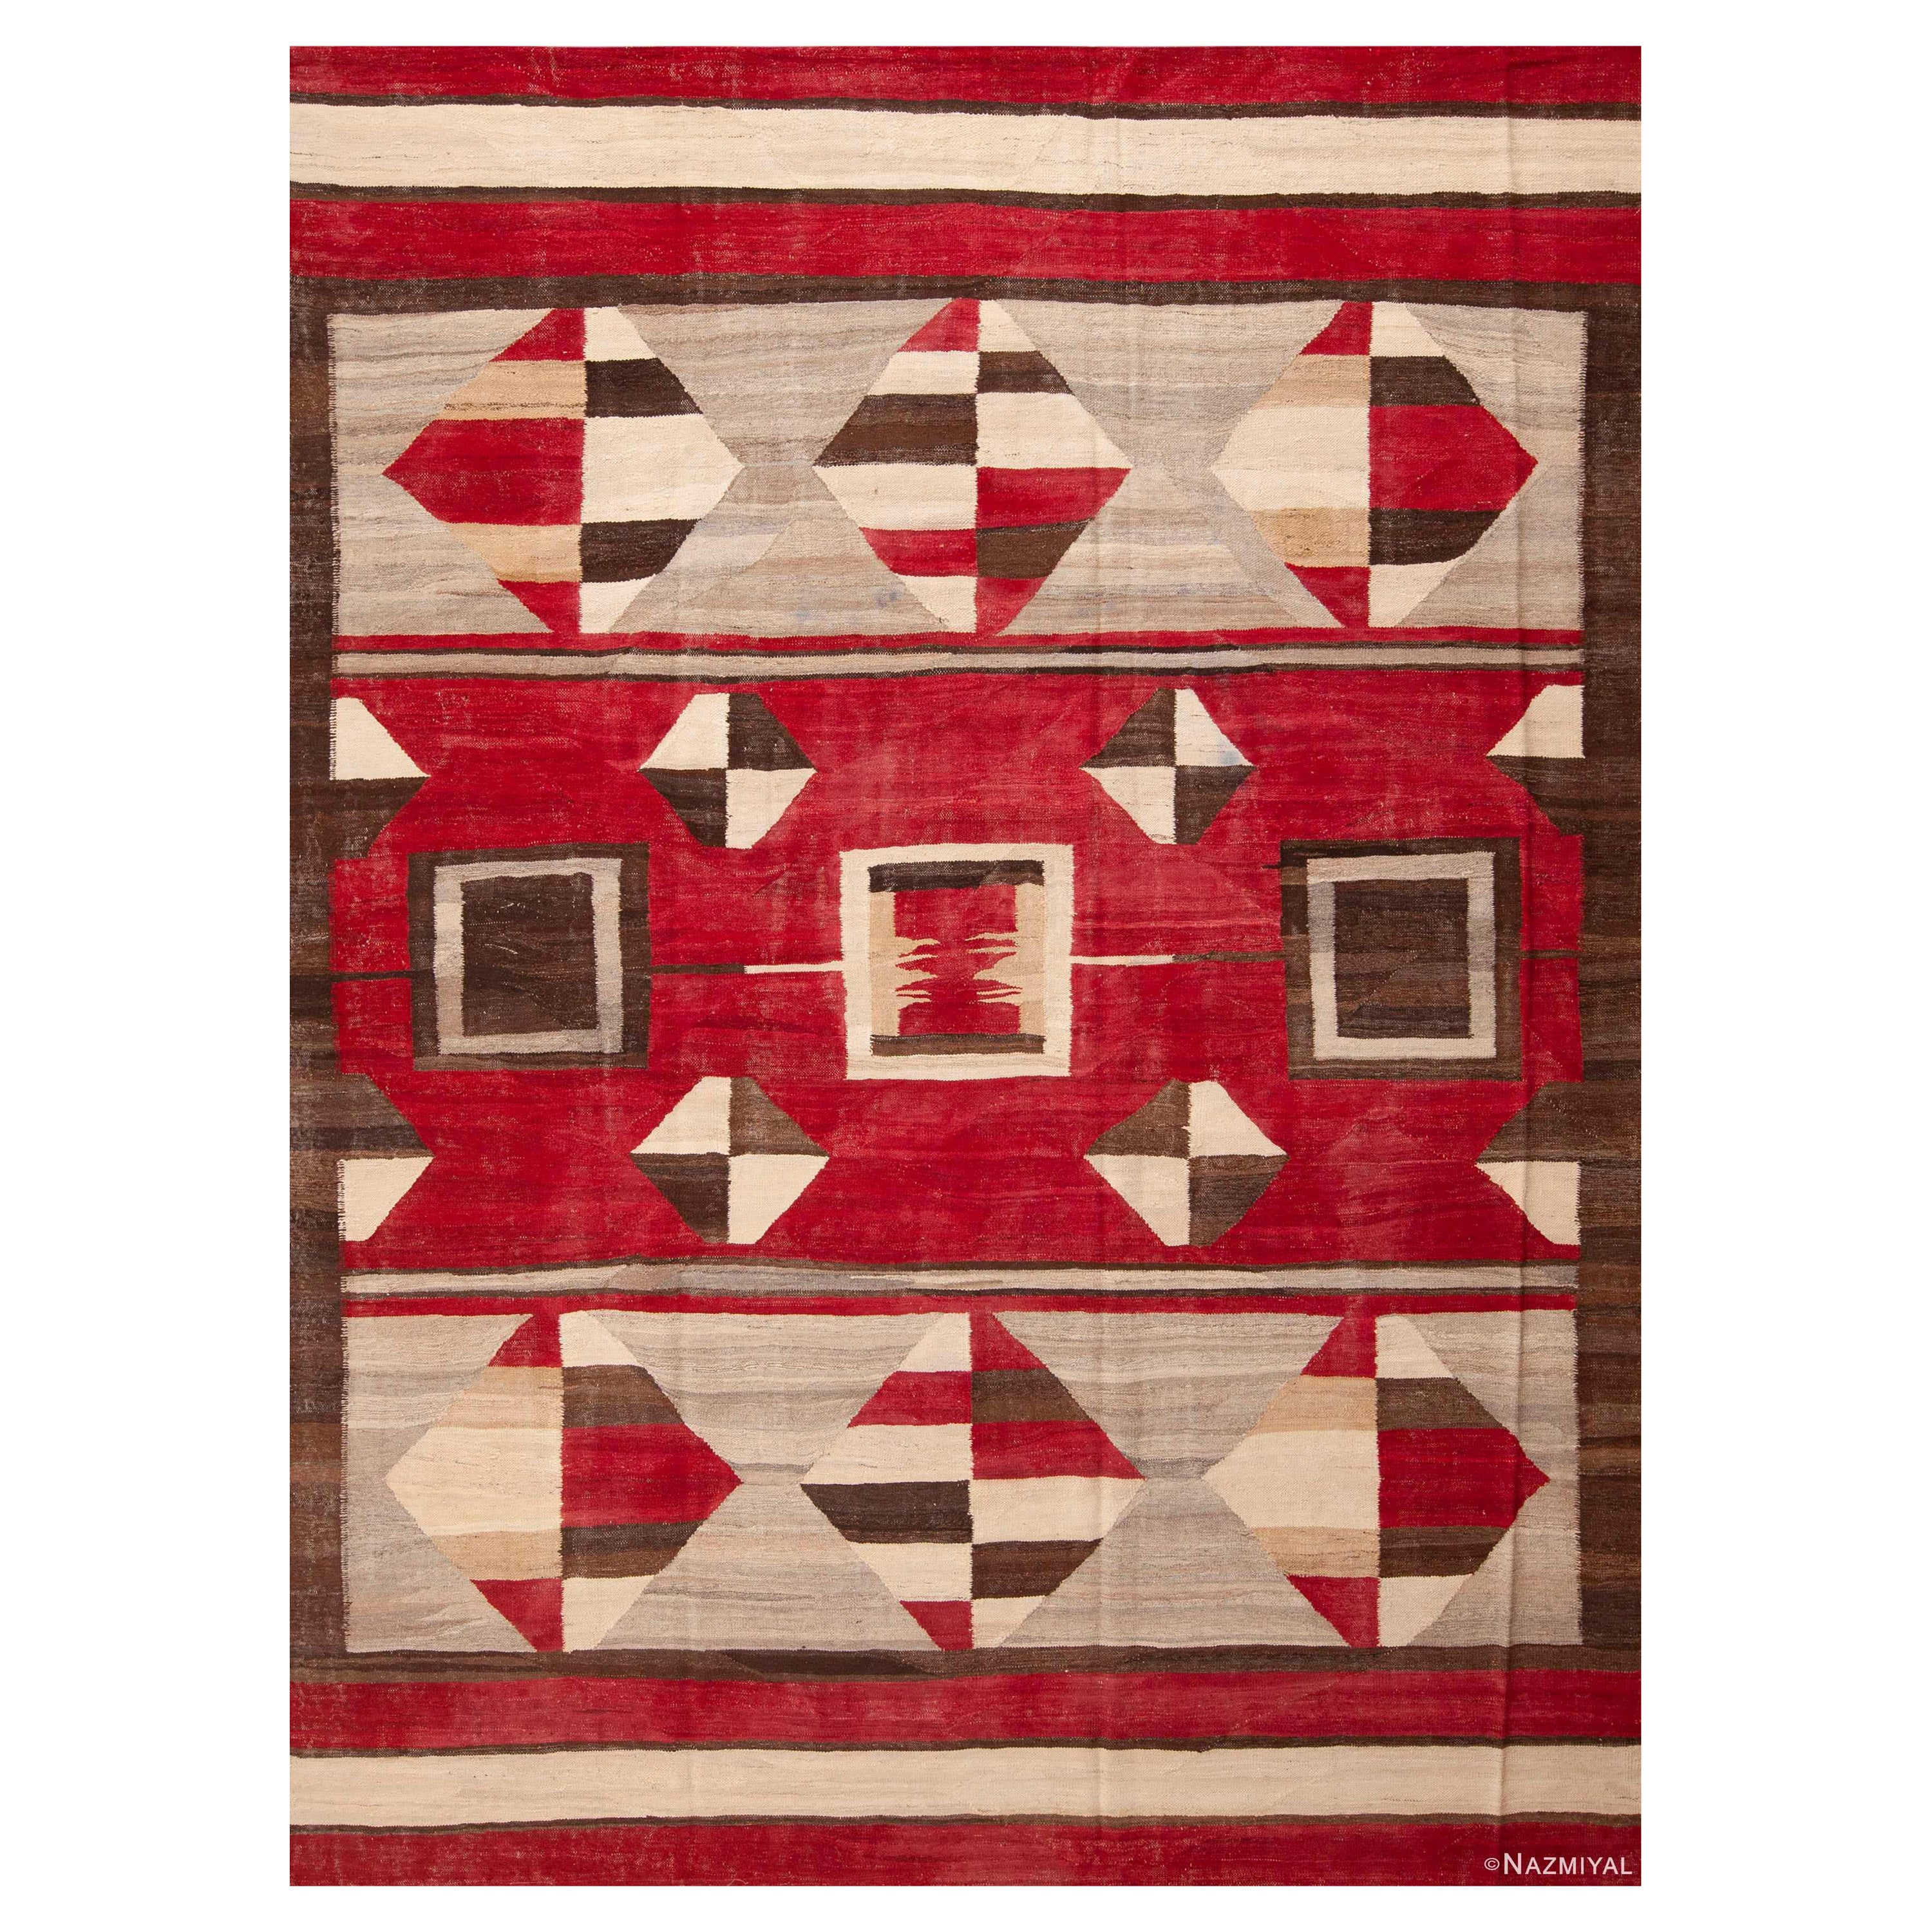 Nazmiyal Collection Modern Tribal Geometric Flatweave Kilim Rug 8'8" x 11'10" For Sale